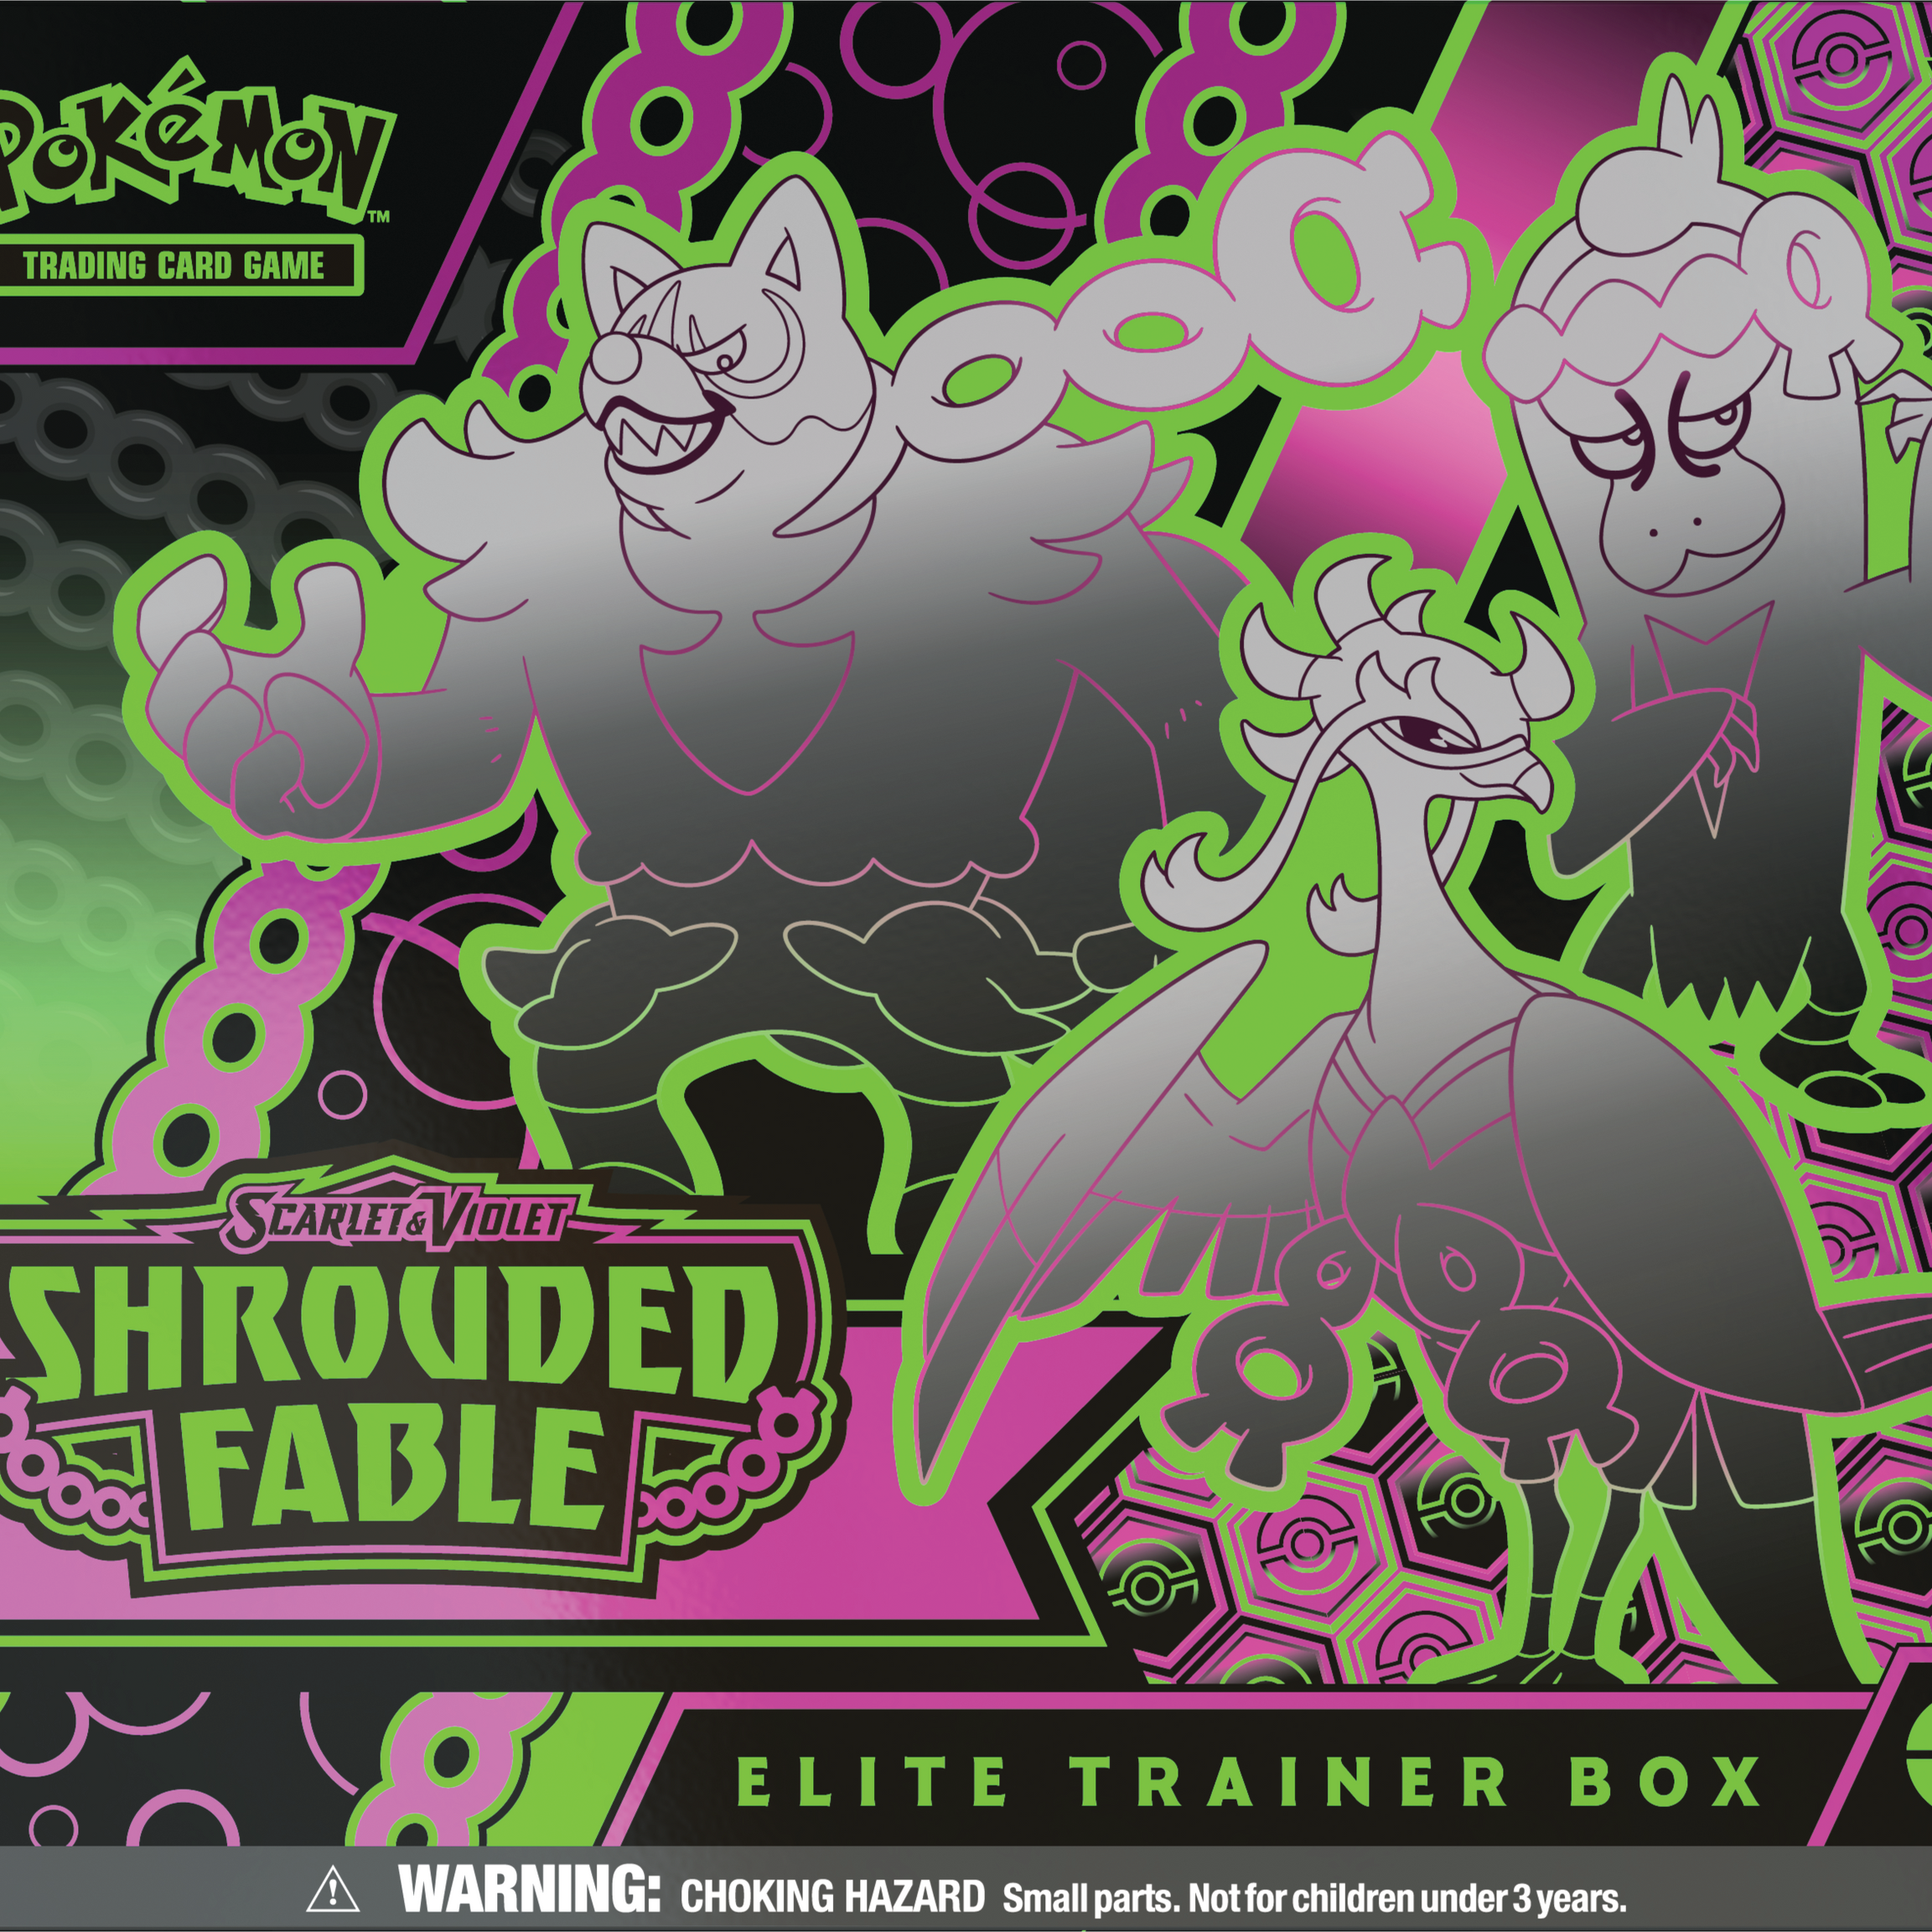 Pokémon TCG: Scarlet & Violet Shrouded Fable Elite Trainer Box